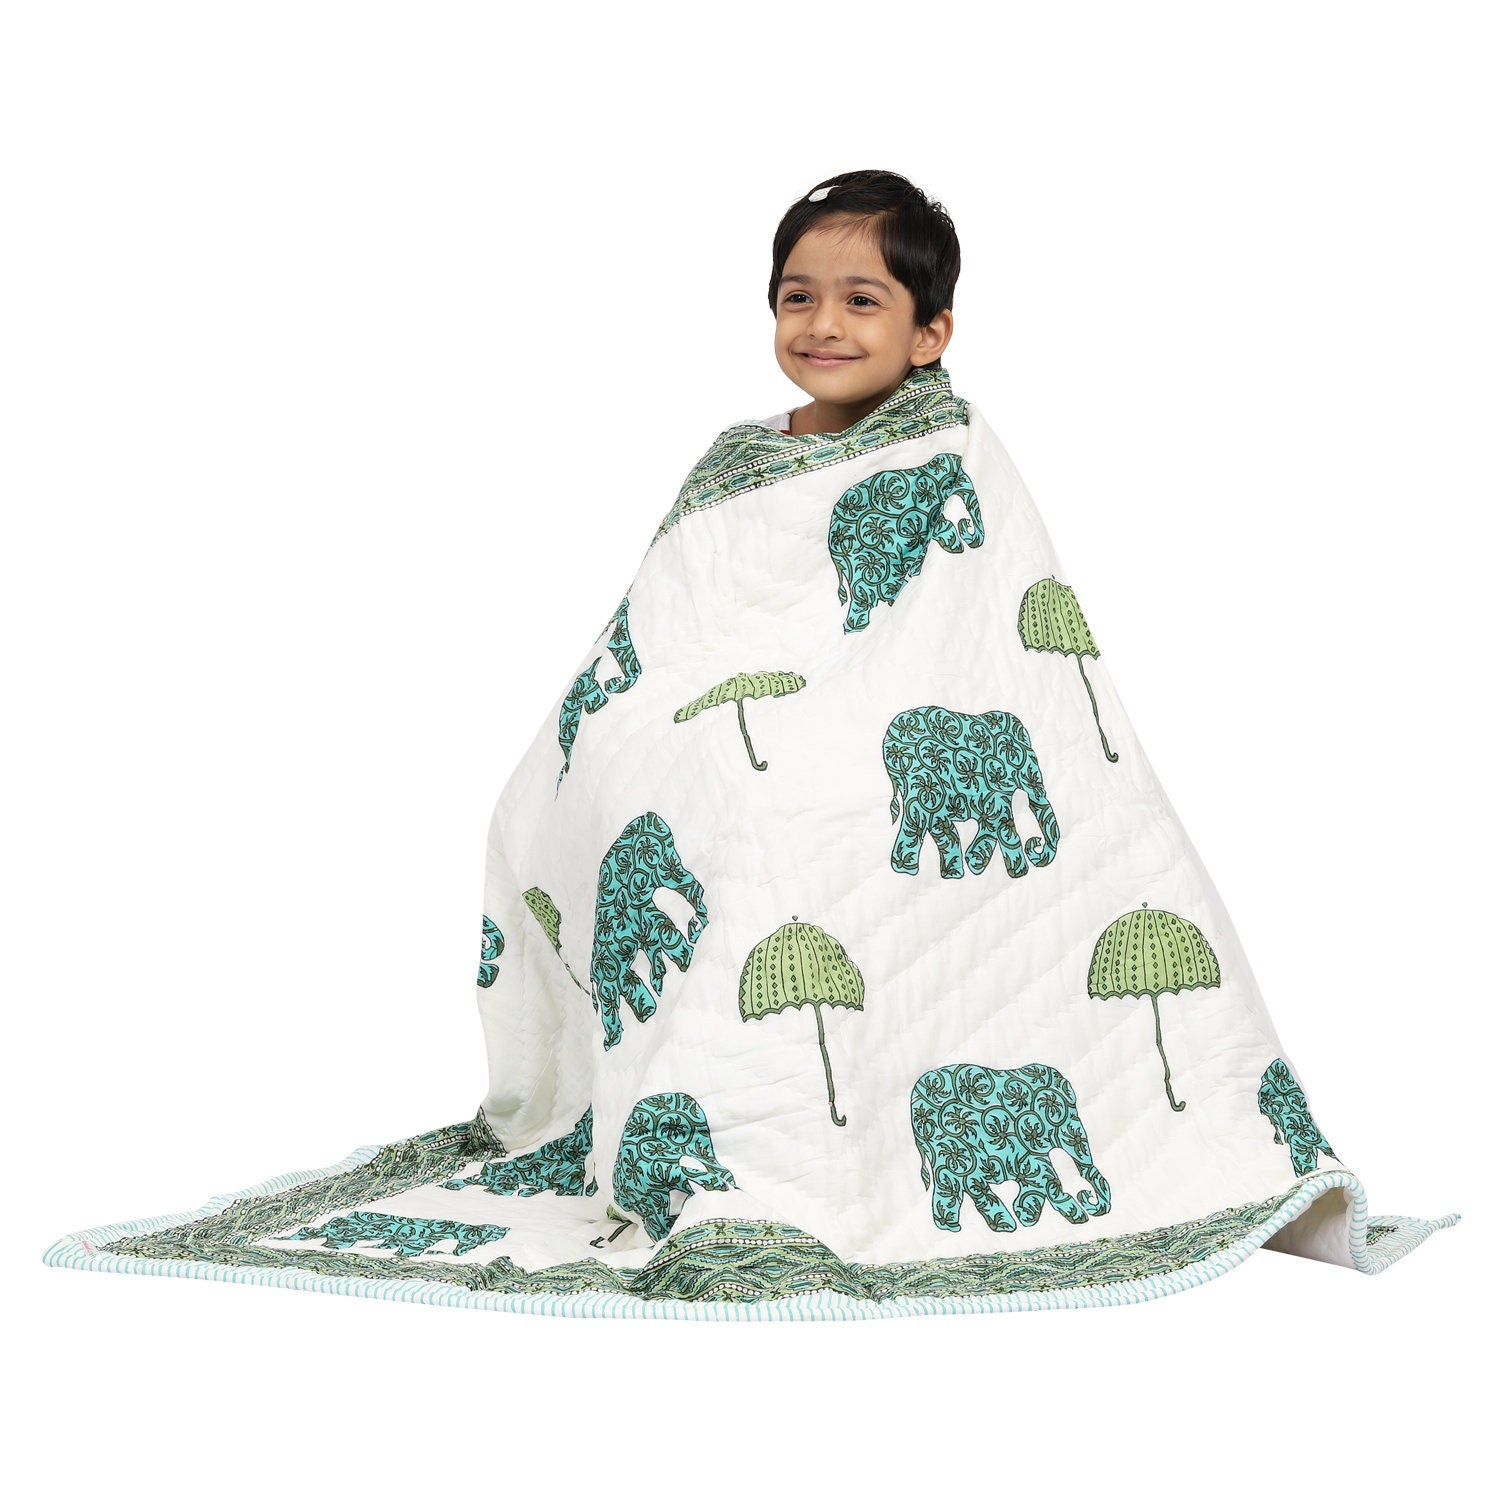 Kids Quilt/Blanket - Organic Cotton - Baby, Infants, Toddlers, Preschoolers, Children - Soft Warm Handmade - Elephants & Umbrellas